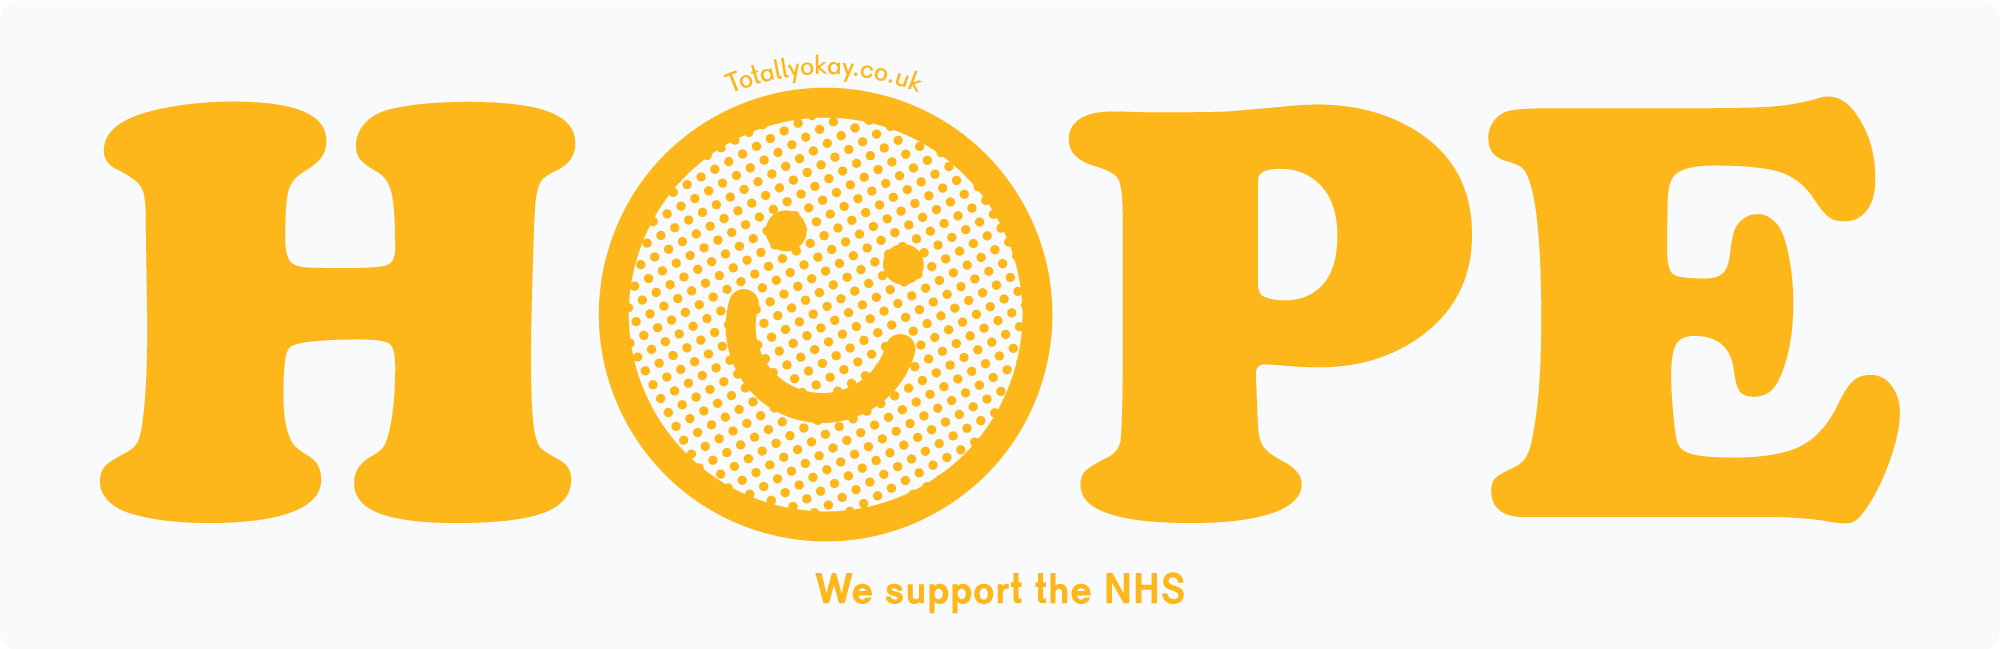 NHS Hope sticker in window